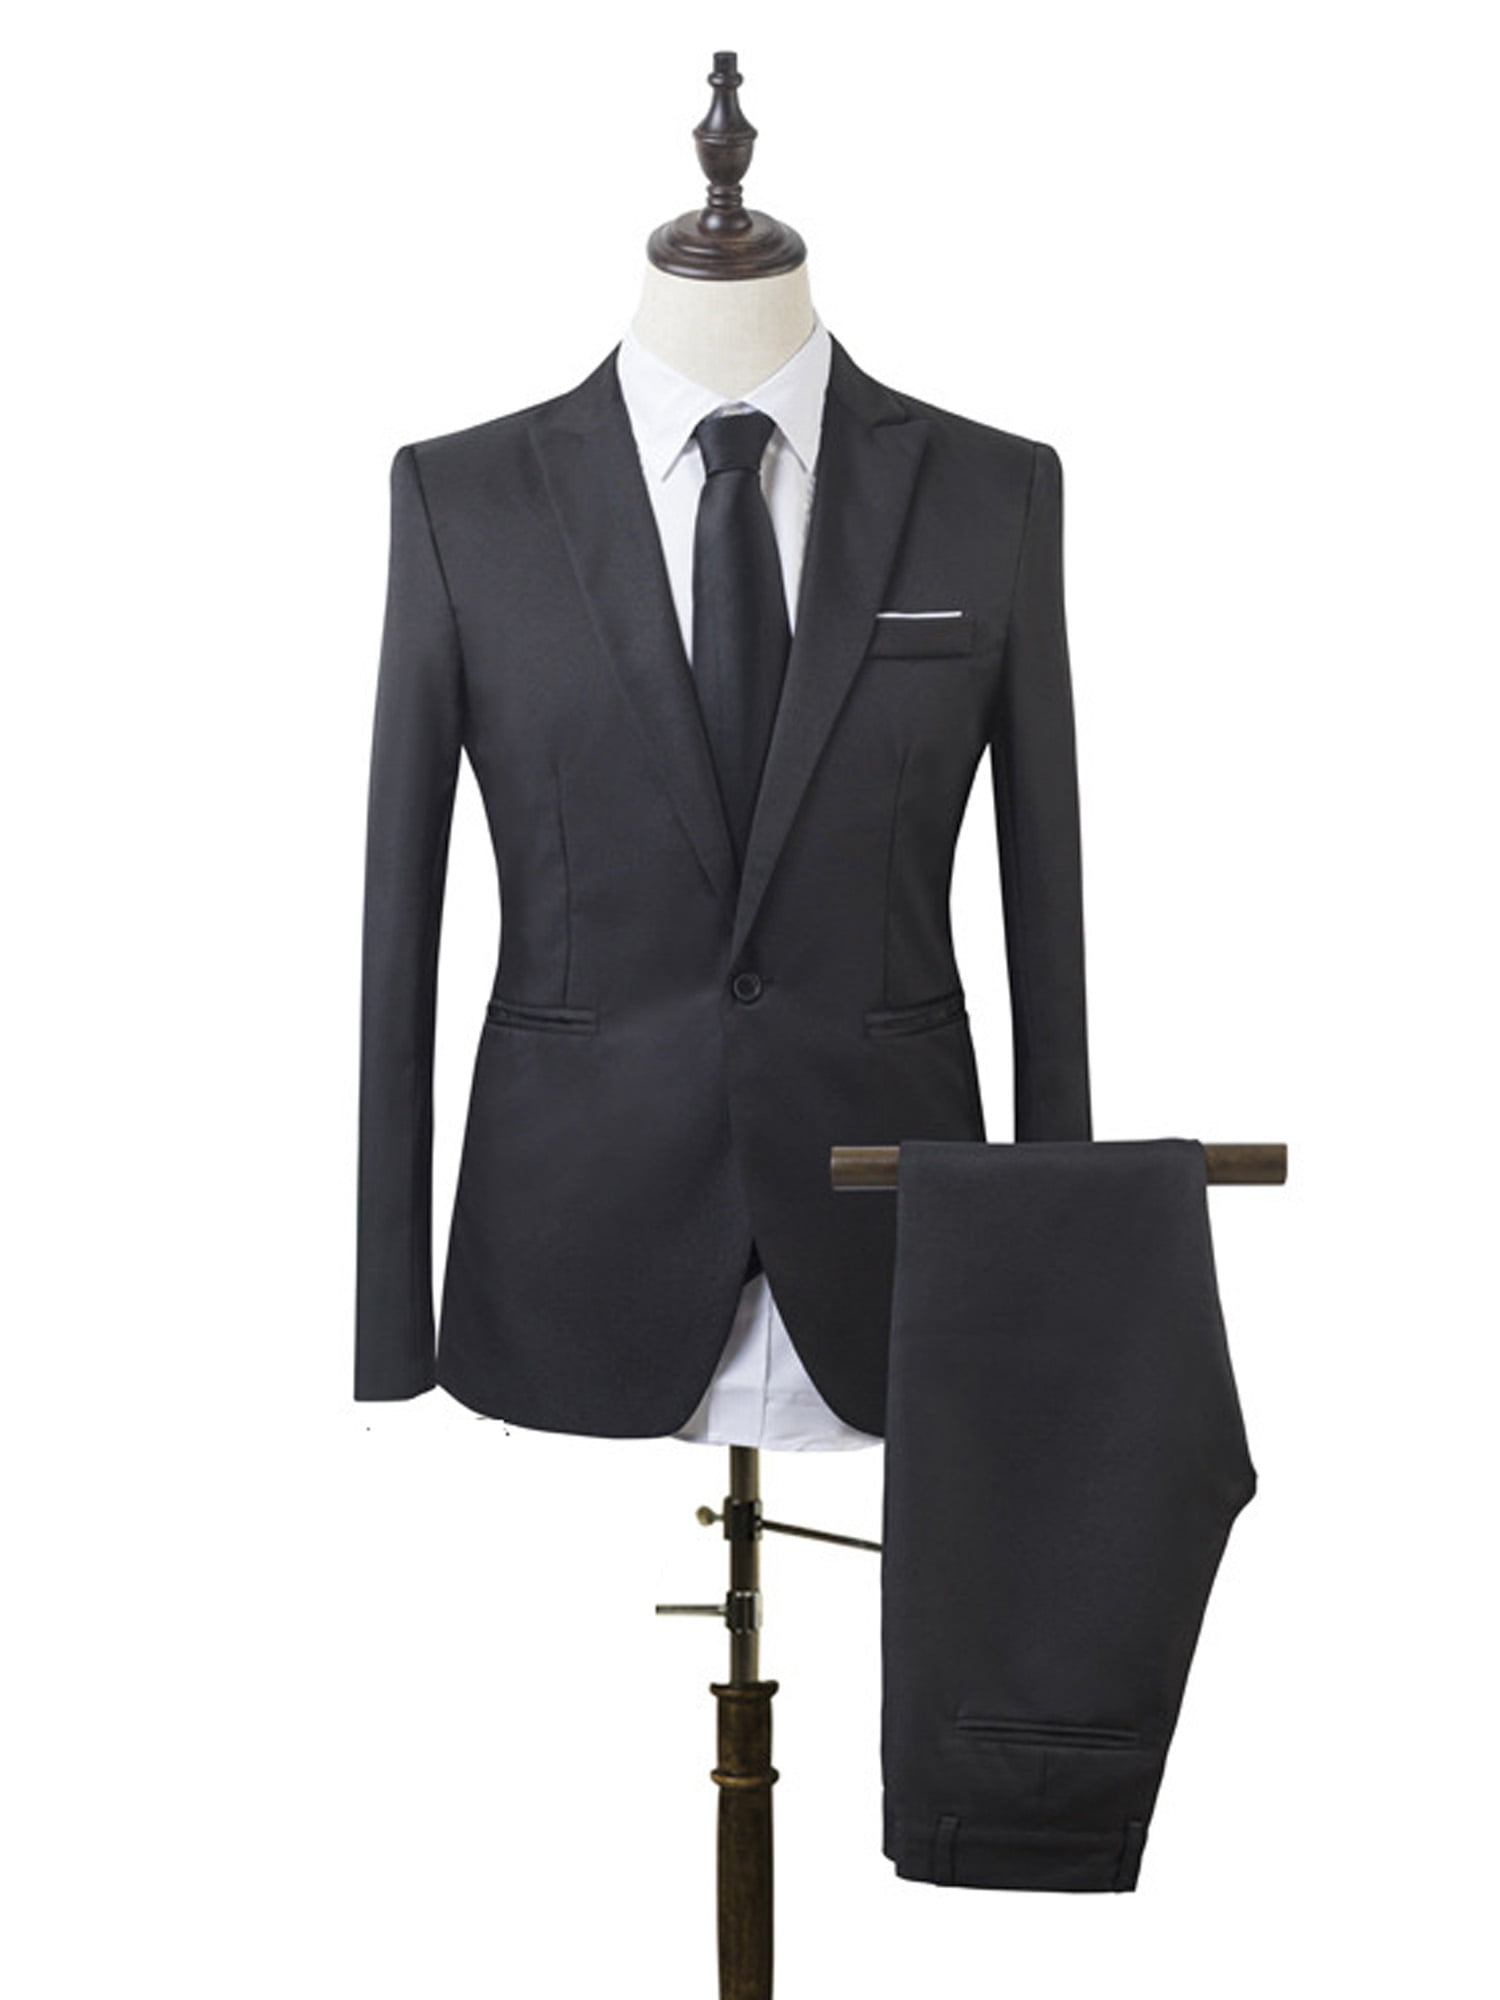 44R Perry Ellis Black Fashion Tuxedo Jacket & Pant Suit for Prom Formal Wedding 